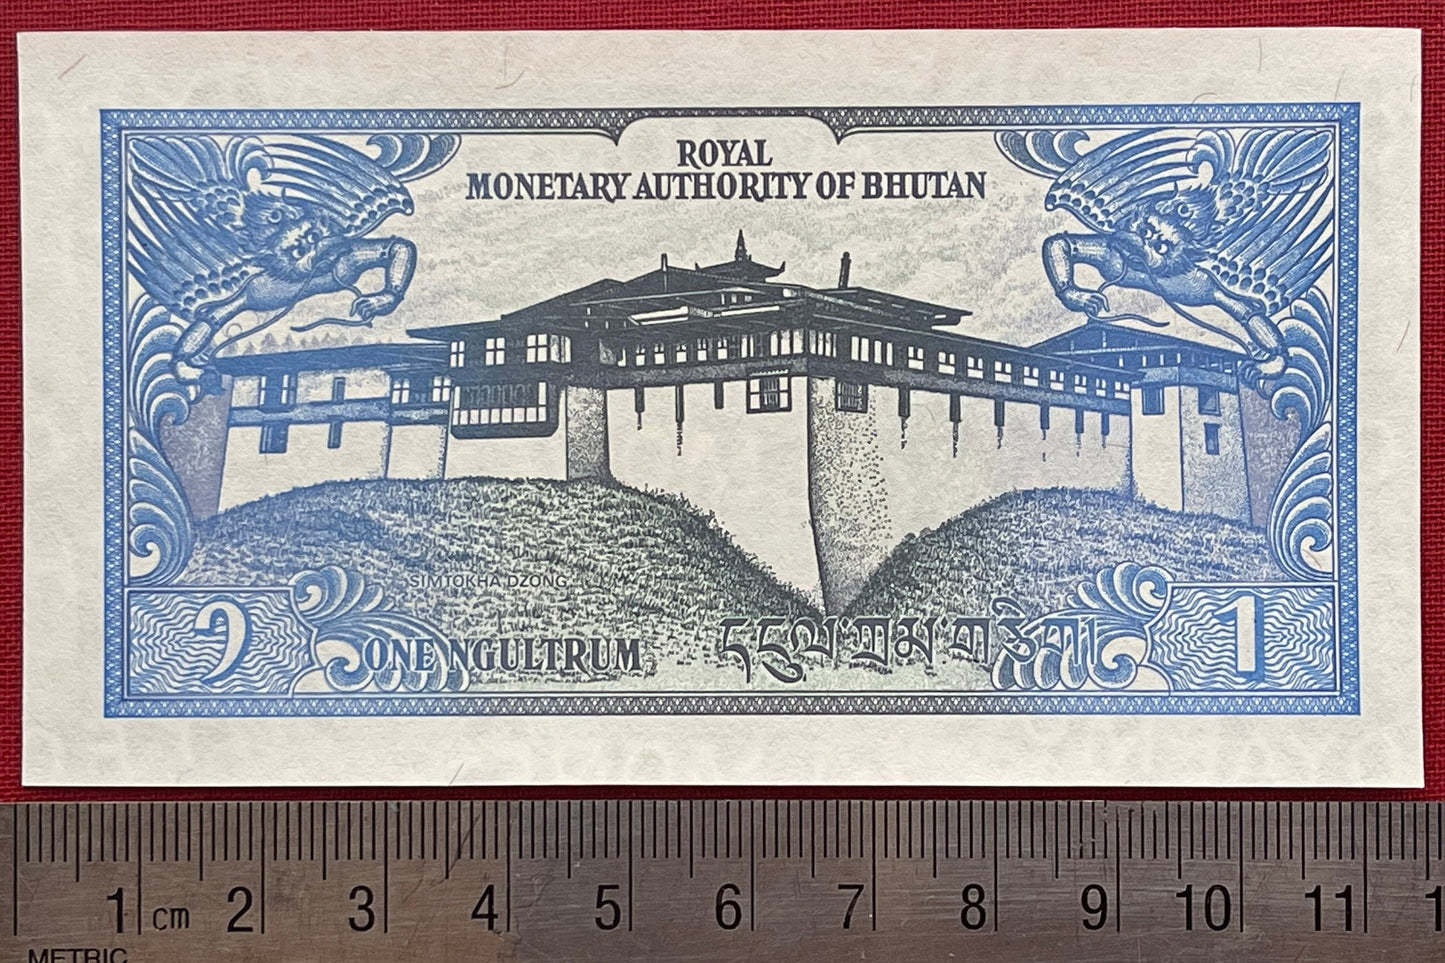 Druk Thunder Dragons & Simtokha Dzong Palace 1 Ngultrum Bhutan Authentic Banknote Money for Jewelry and Craft Making